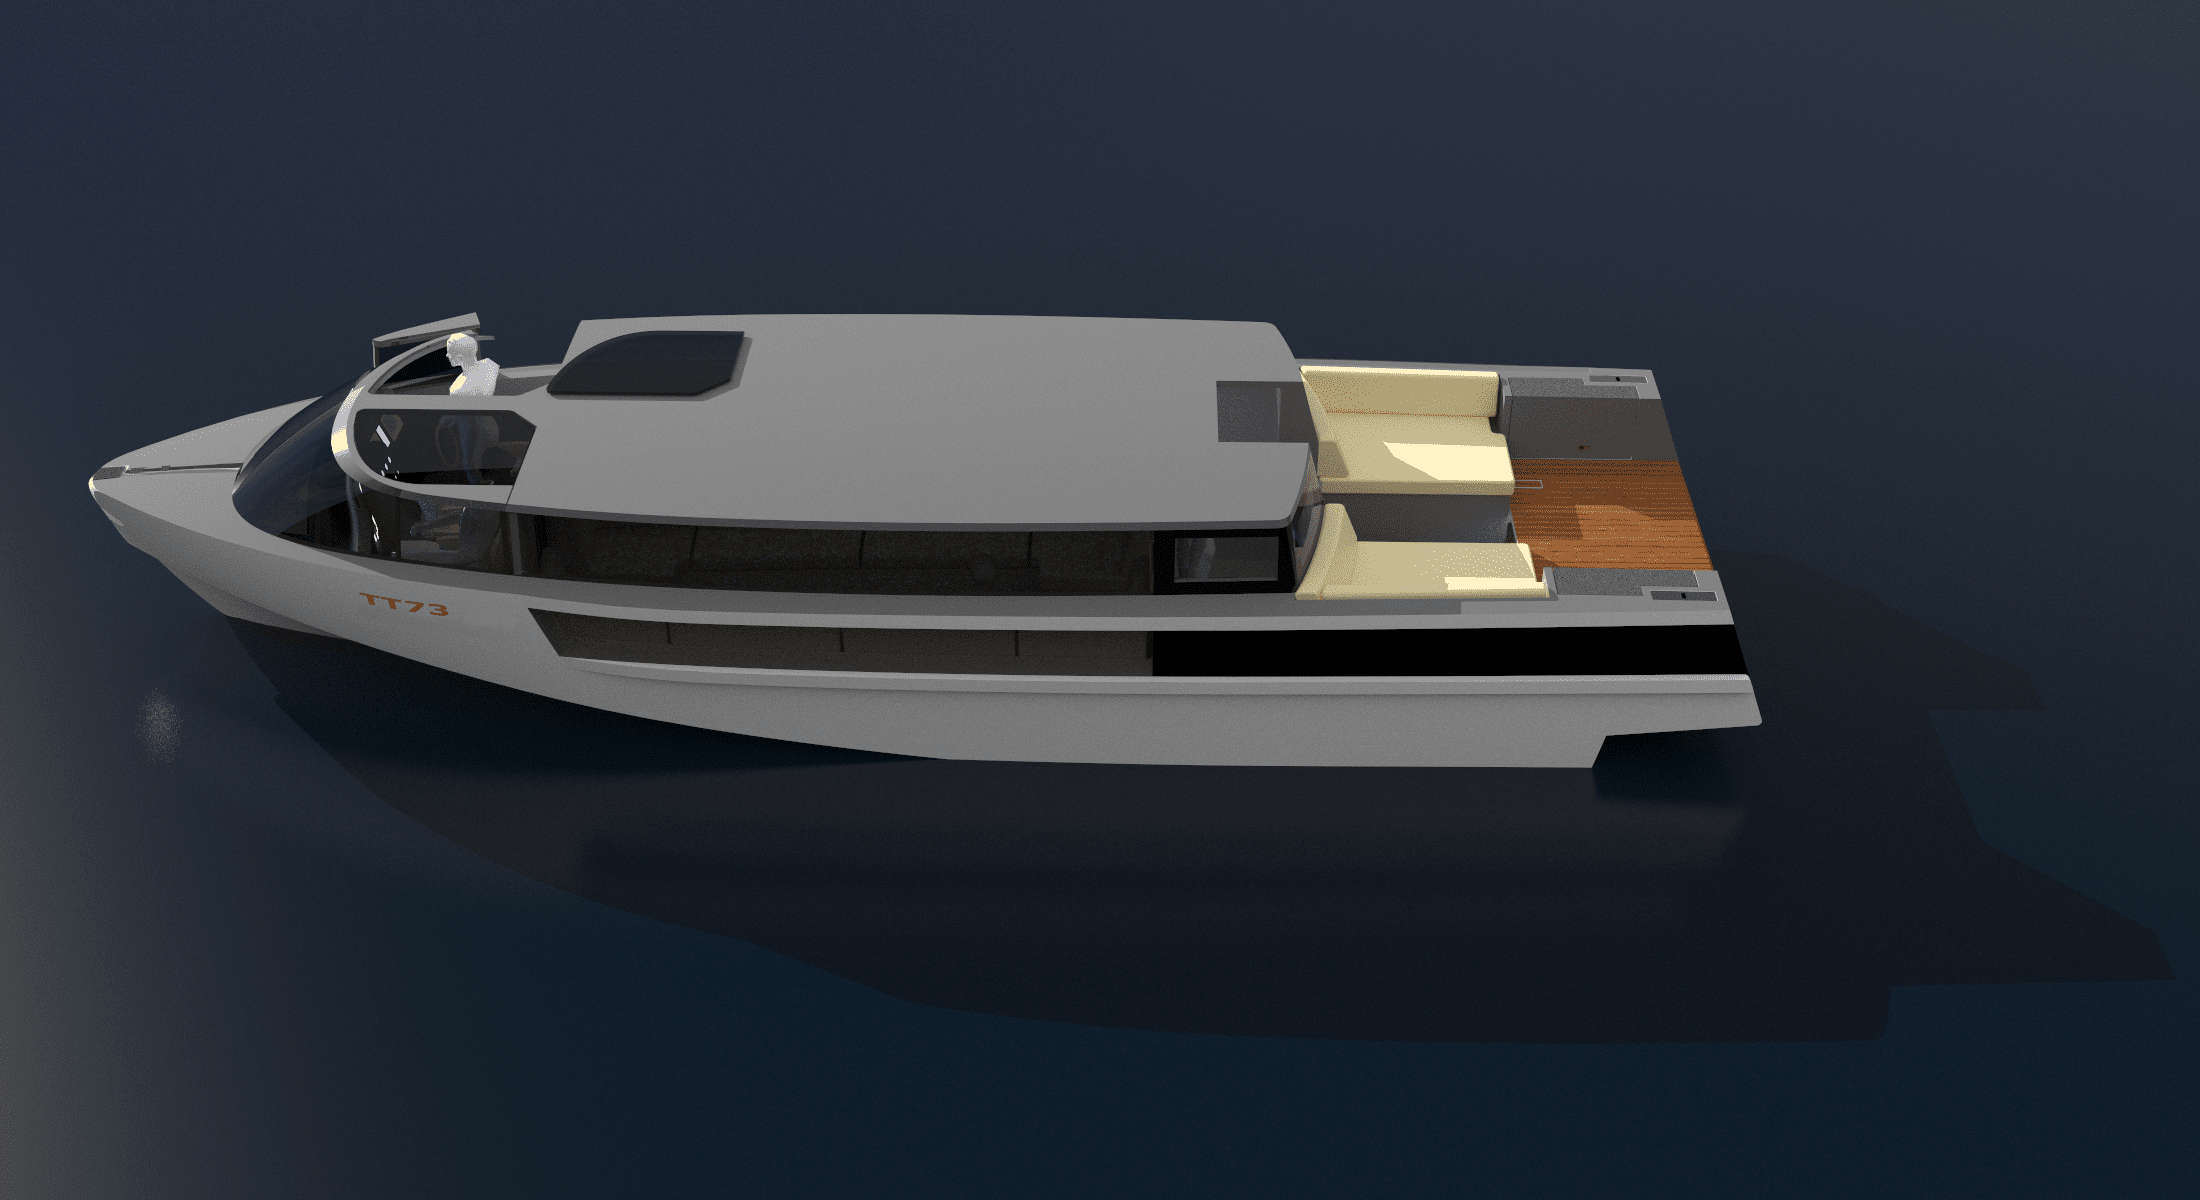 tt70-yacht-design-architect+carignani-2